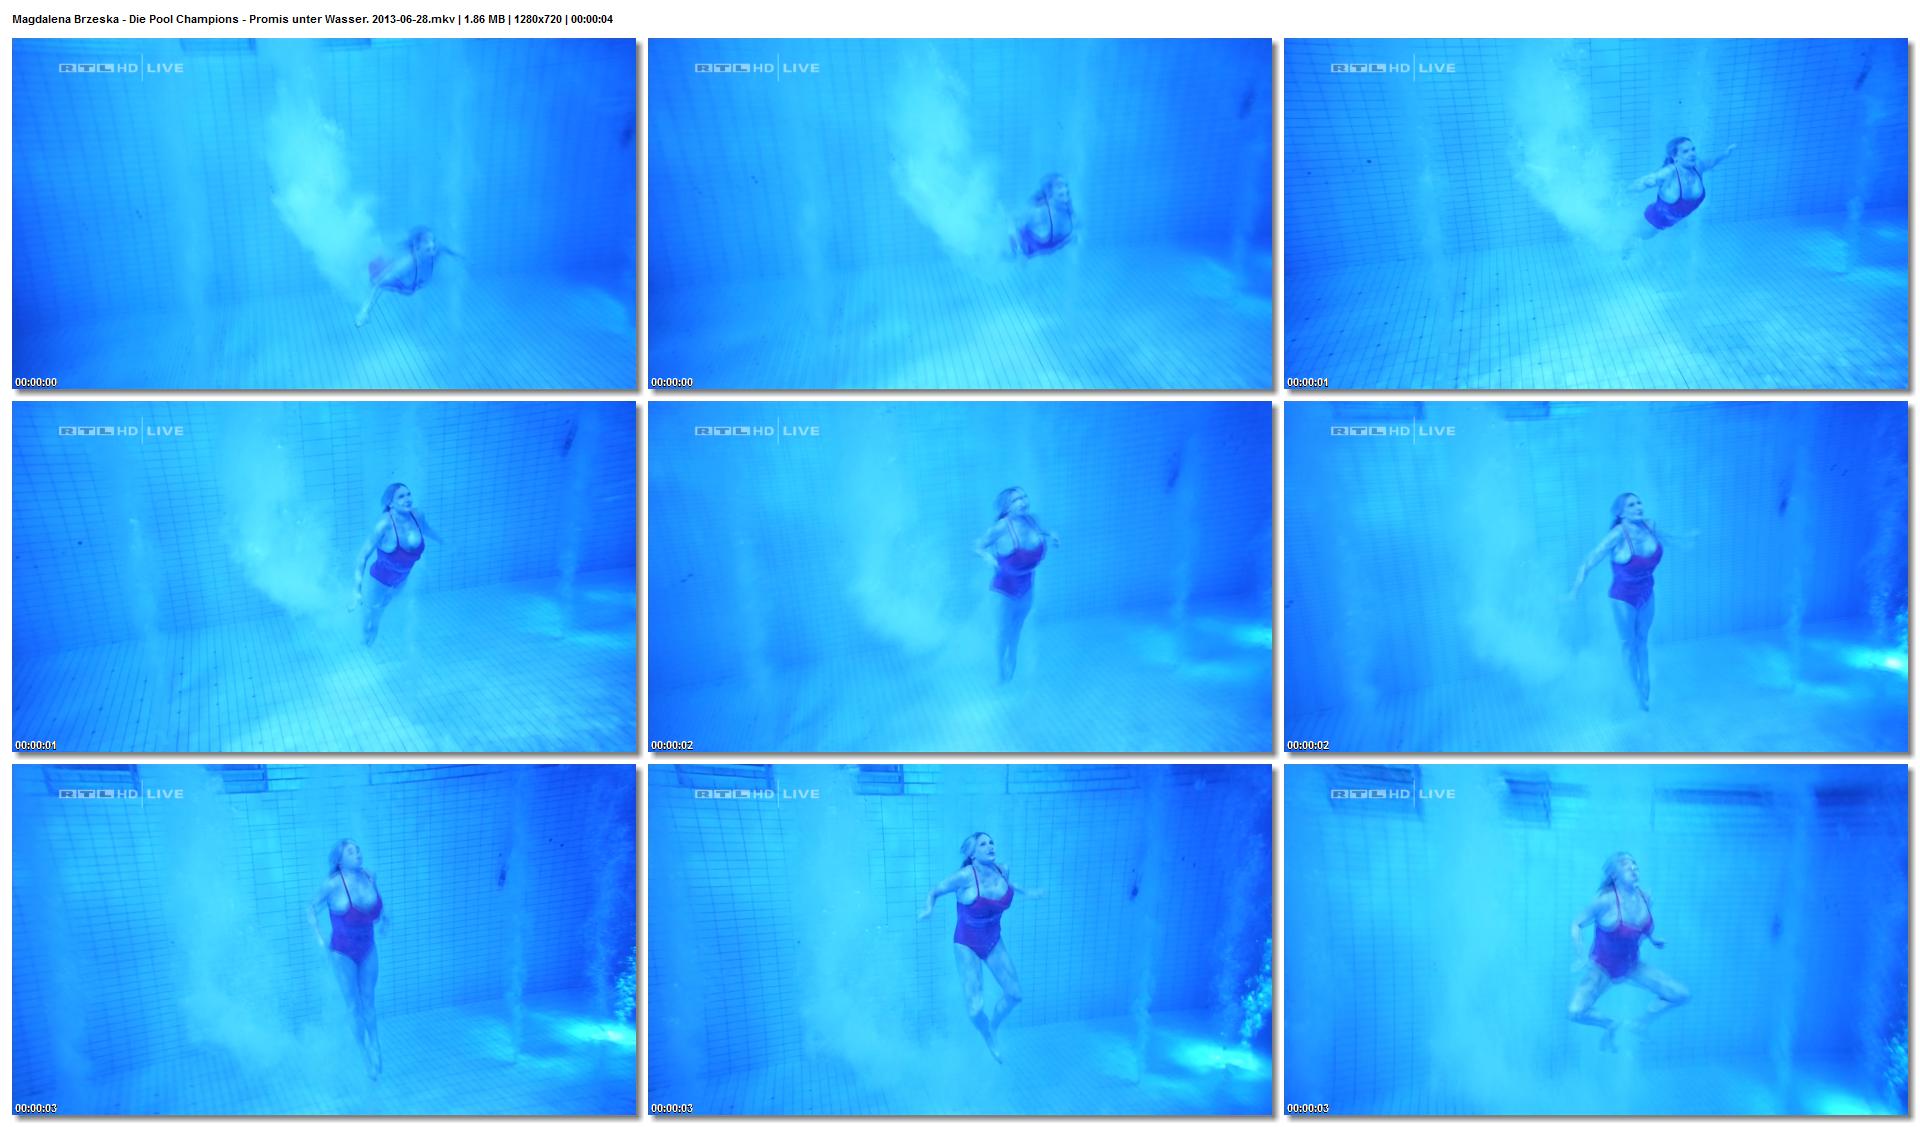 Magdalena Brzeska - Die Pool Champions - Promis unter Wasser. 2013-06-28.jpg